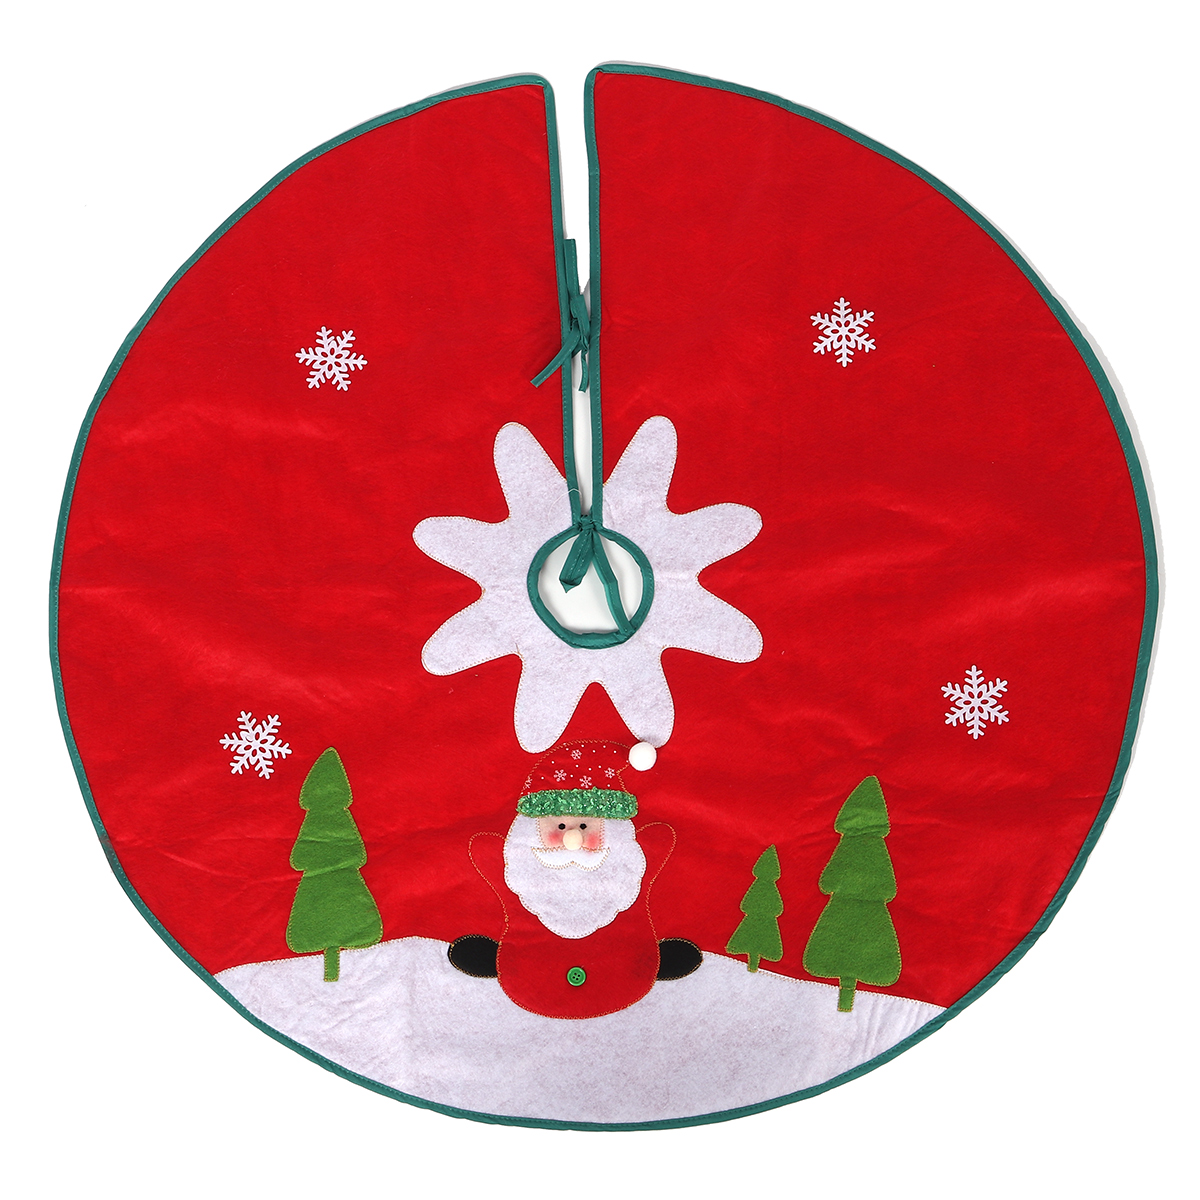 2020-Christmas-Decor-Santa-Claus-Christmas-Tree-Skirt-Aprons-New-Year-Xmas-Tree-Carpet-Foot-Cover-fo-1770951-2